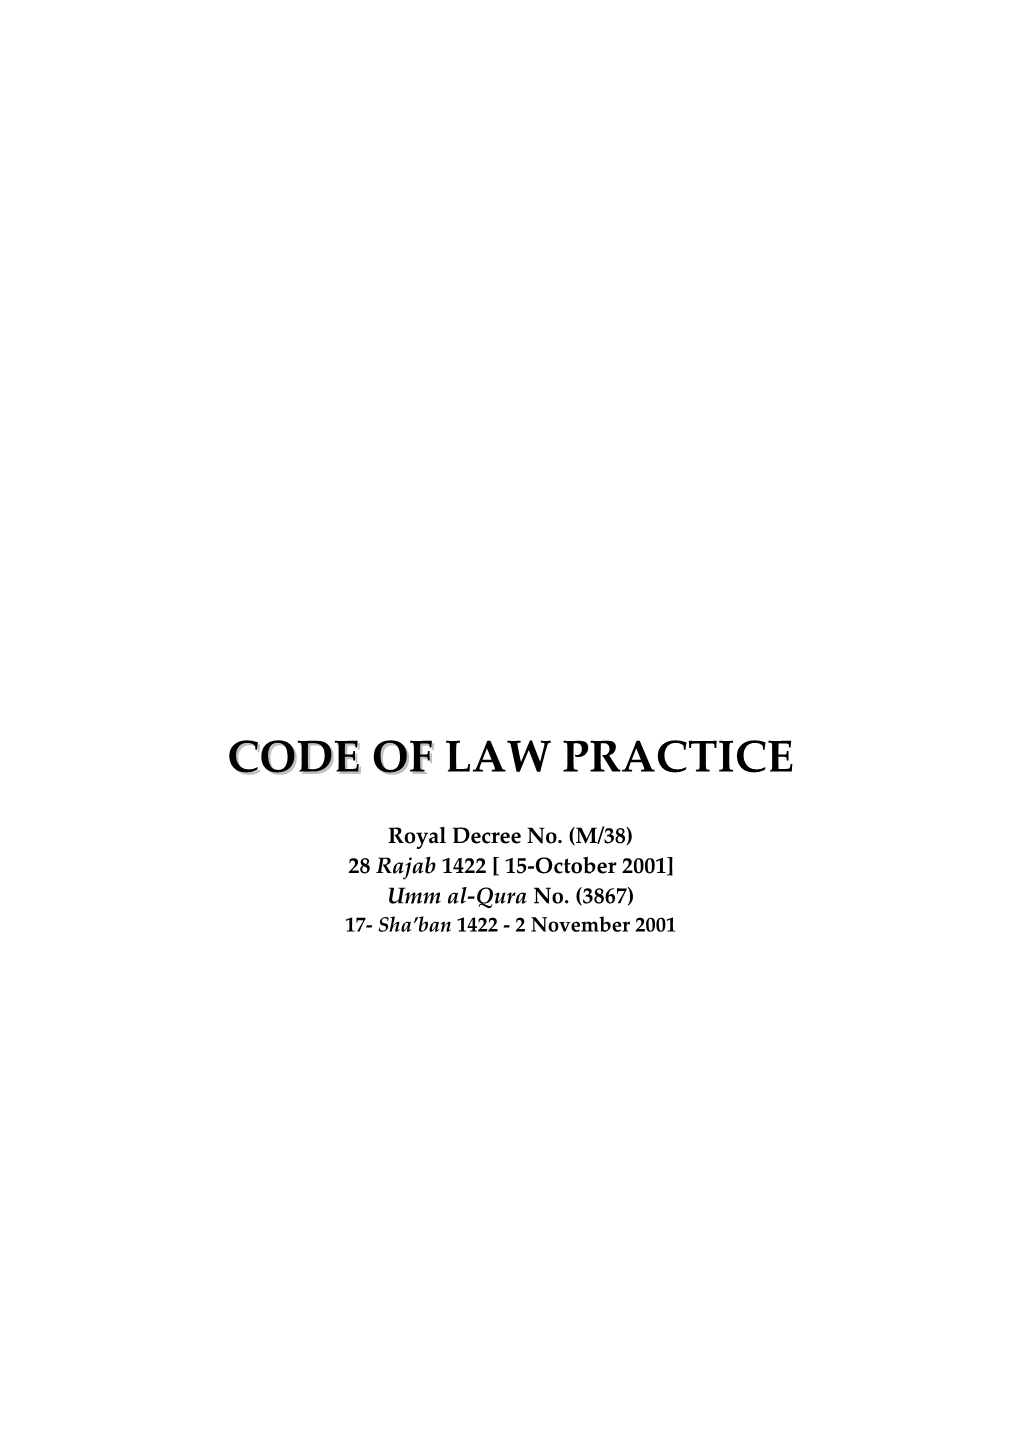 The Code Oflaw Practice